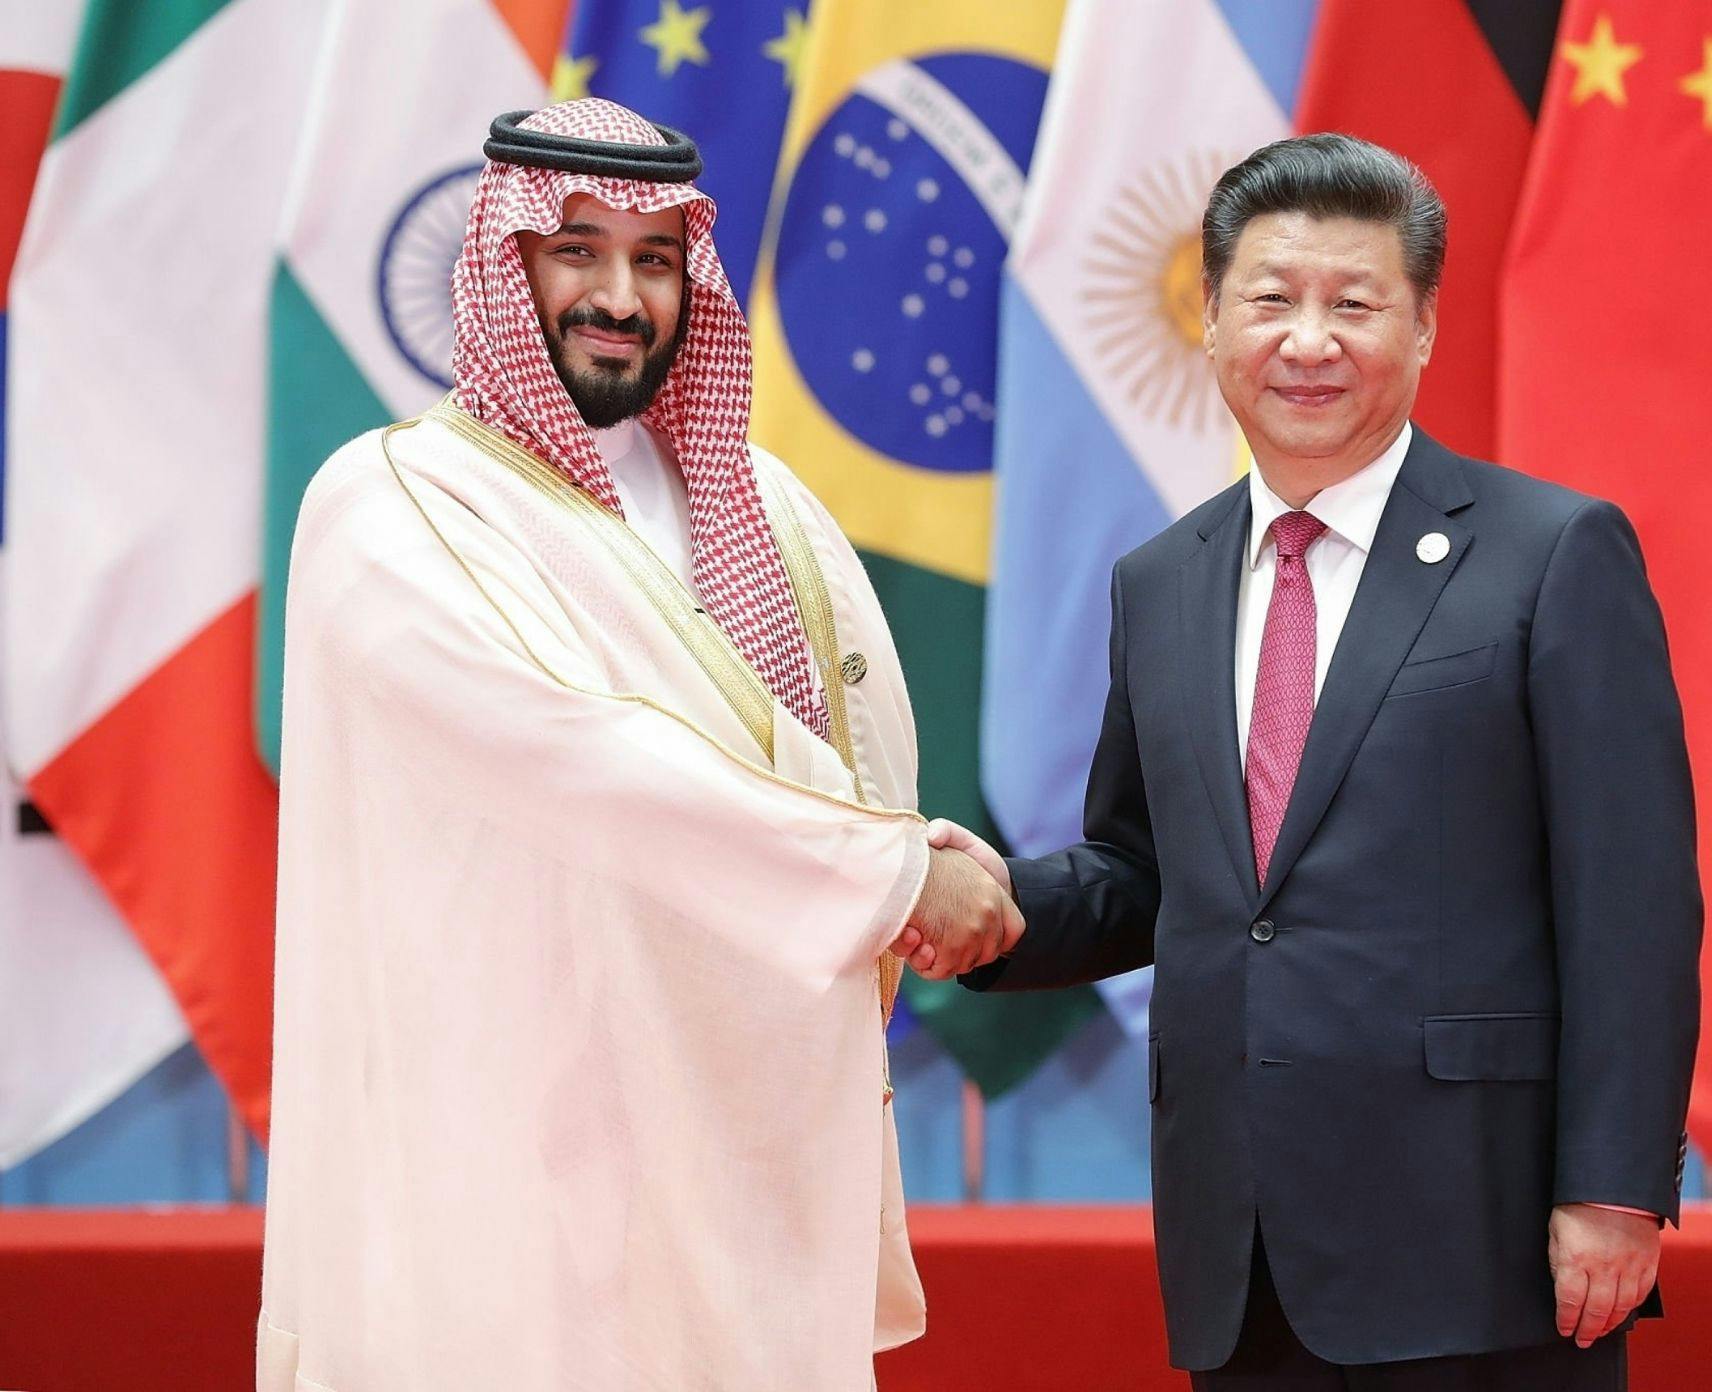 Chinese President Xi Jinping (right) shakes hands with Saudi Deputy Crown Prince and Minister of Defense Mohammed bin Salman bin Abdulaziz Al Saud tat the G20 Summit on Sep 4, 2016 in Hangzhou, China